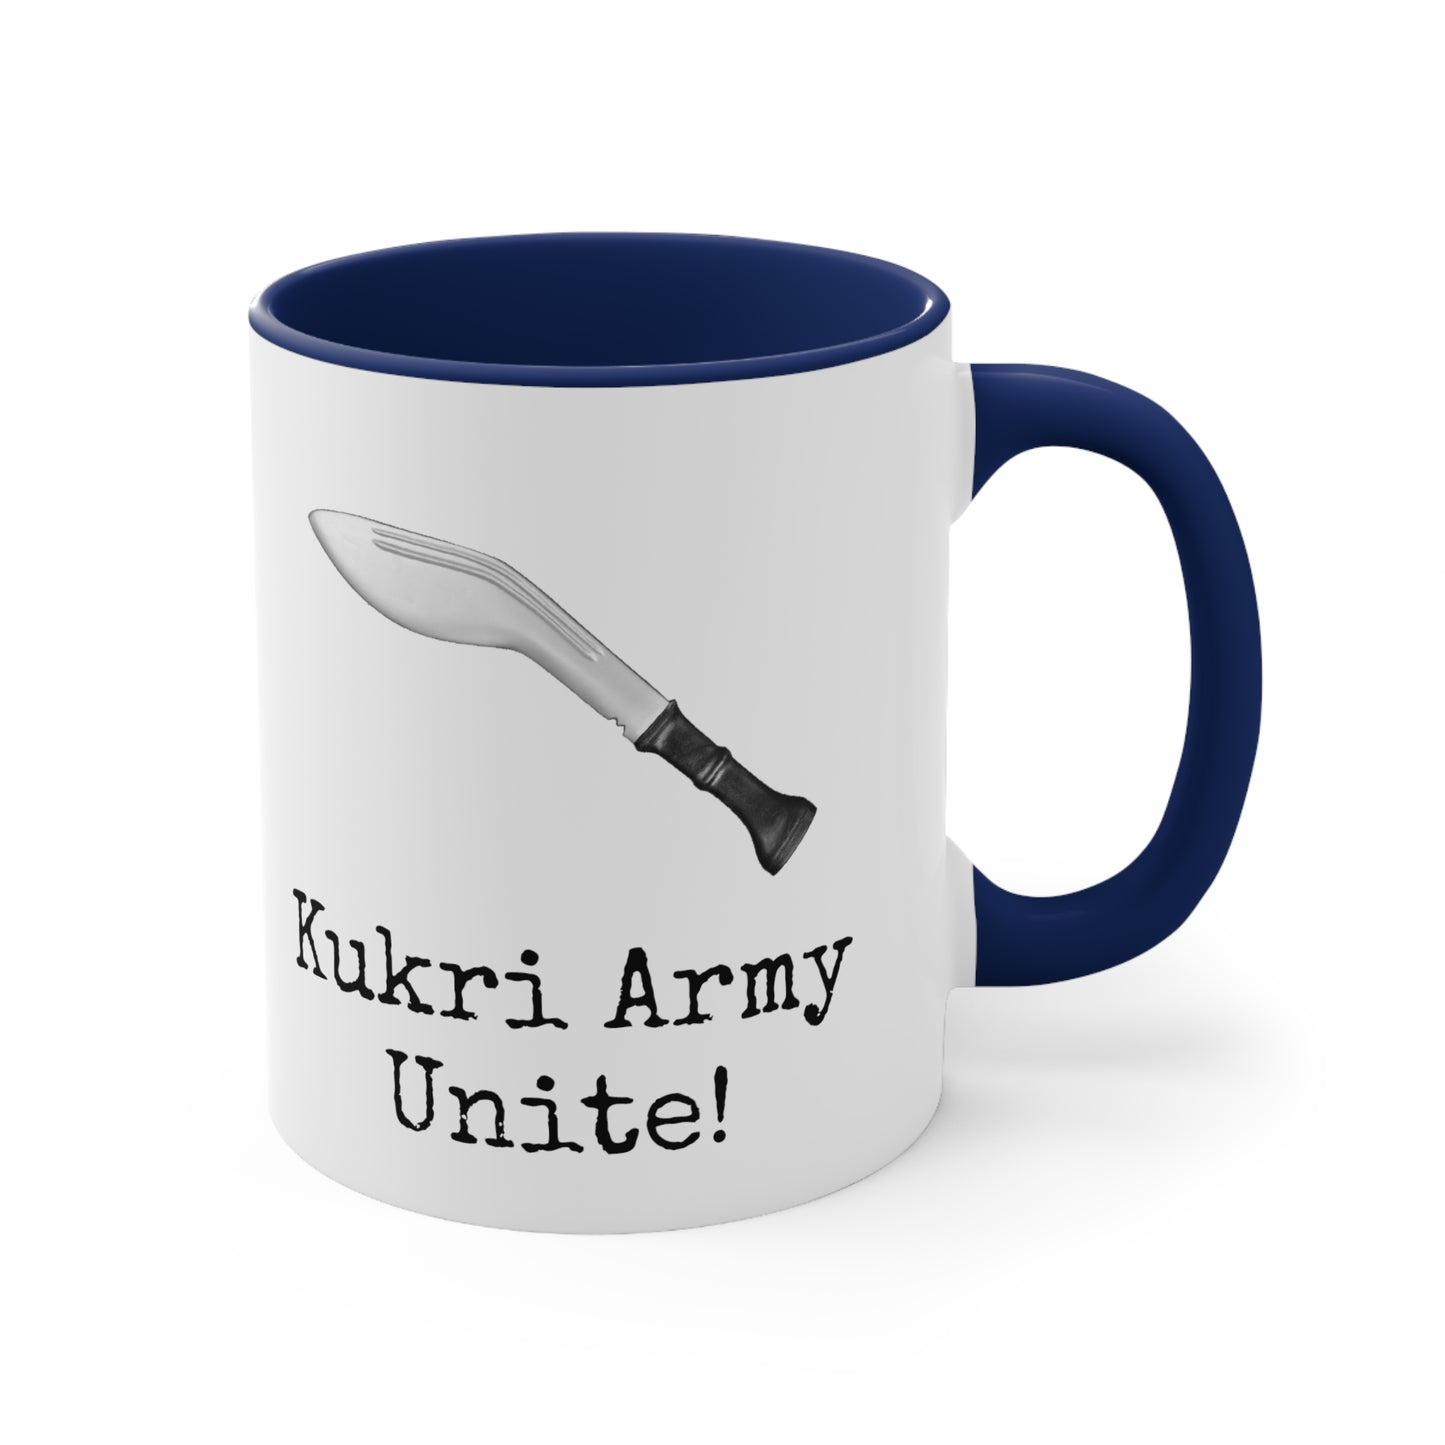 Kukri Army Mug!